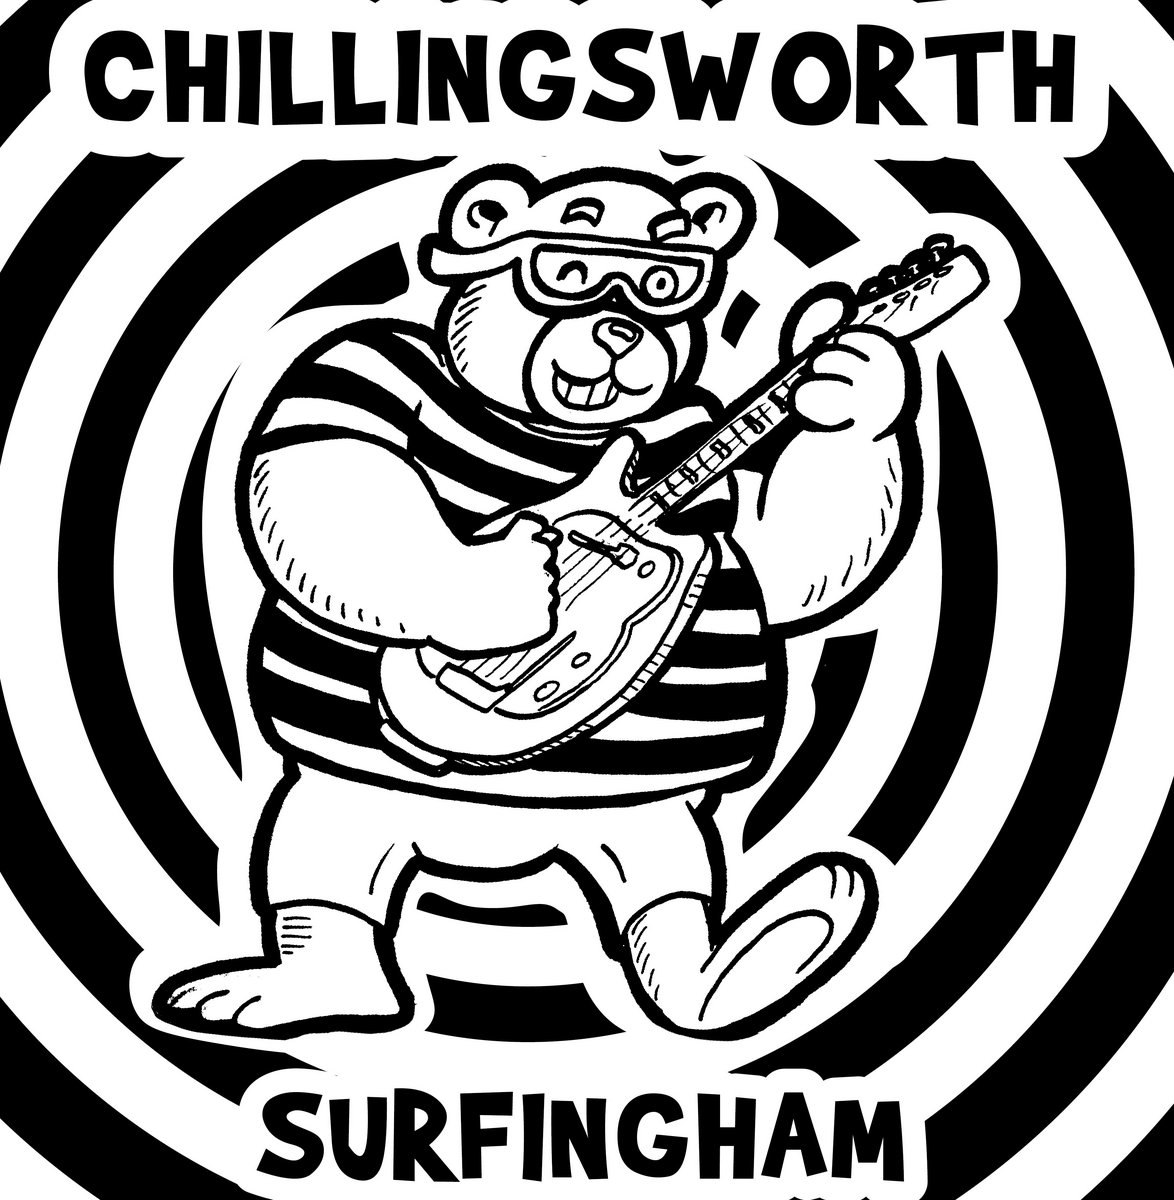 Chillingsworth Surfingham